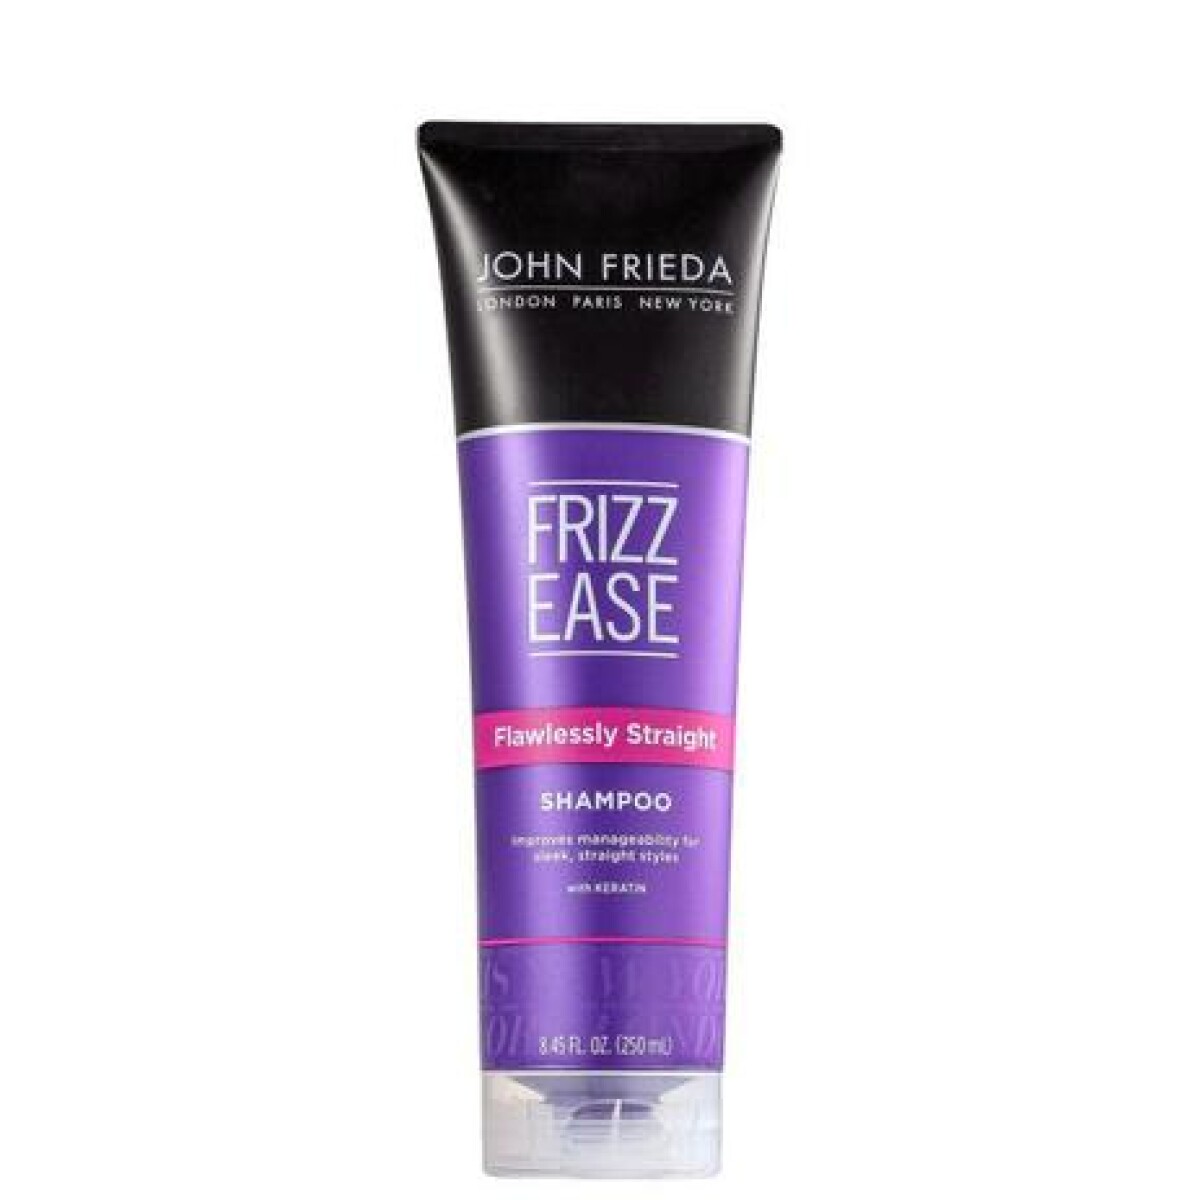 John Frieda Frizz Ease Flawlessly Straight Shampoo 250ml 